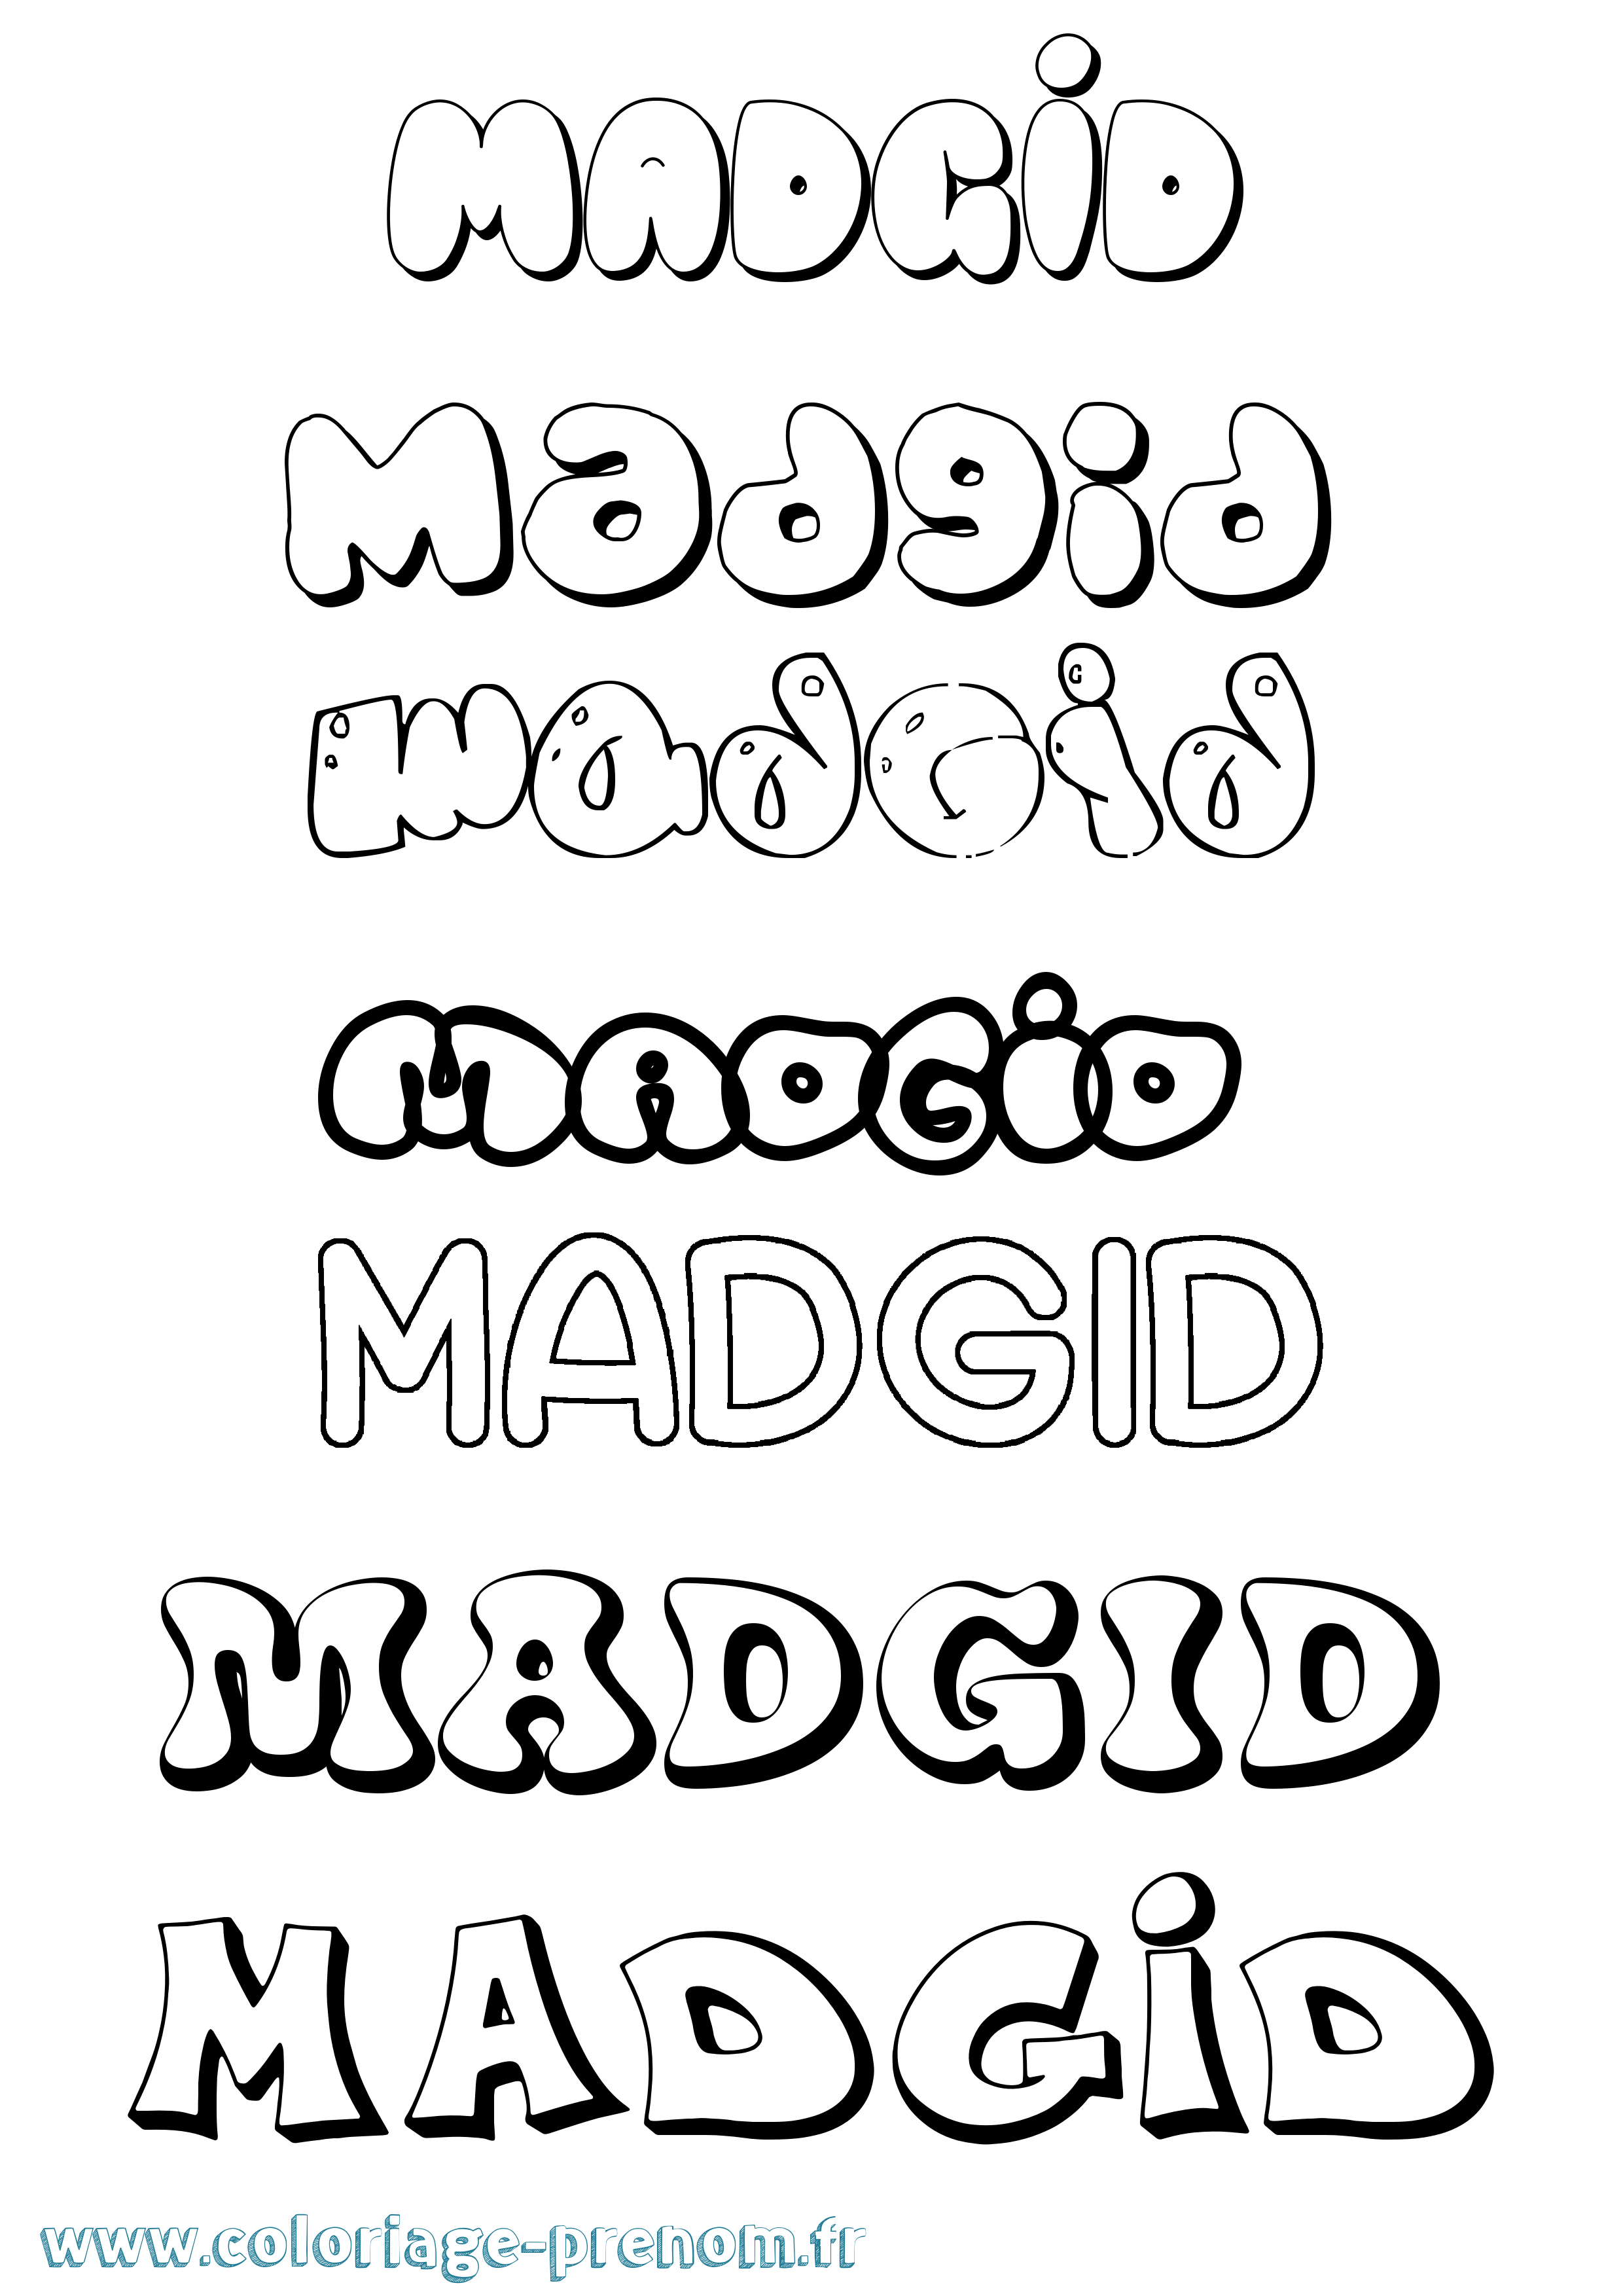 Coloriage prénom Madgid Bubble